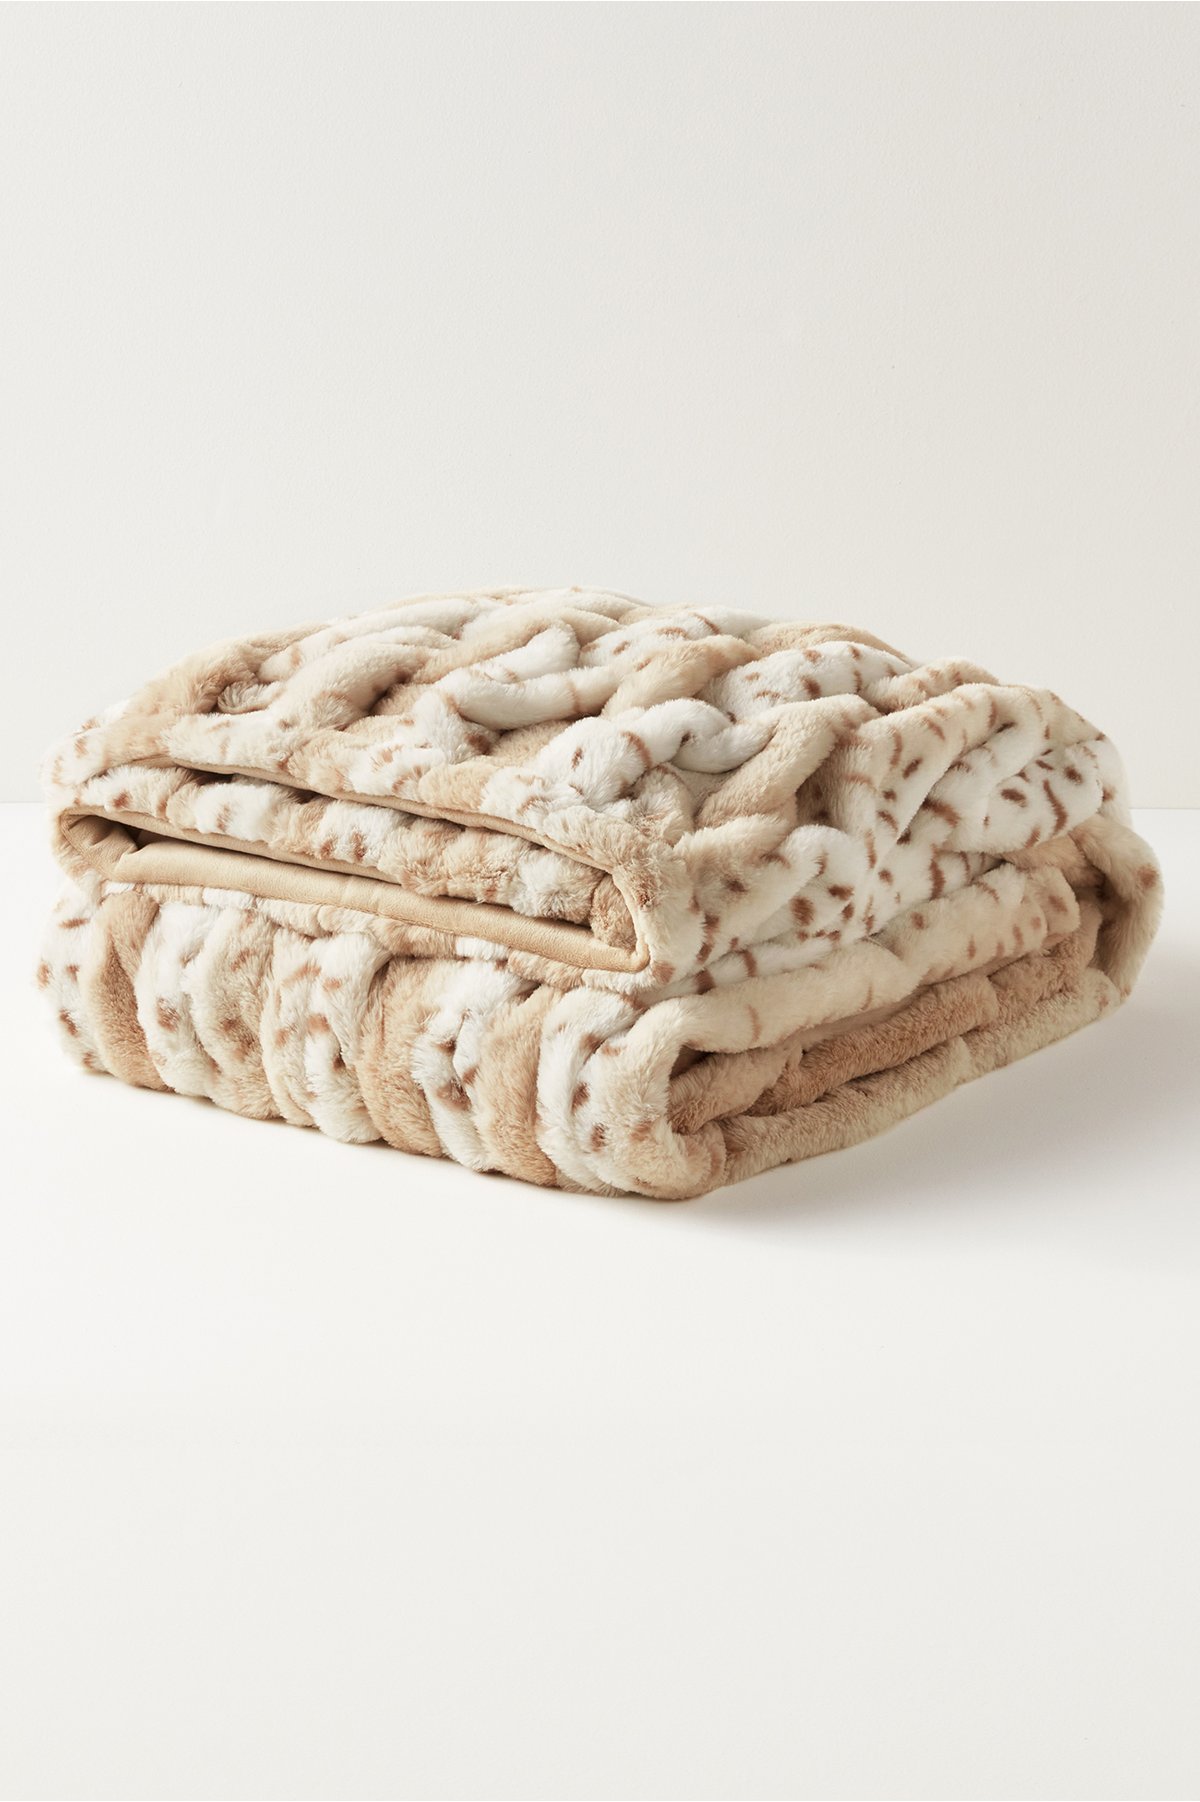 La Parisienne Faux Fur Throw Blanket by Soft Surroundings, in Snow Leopard